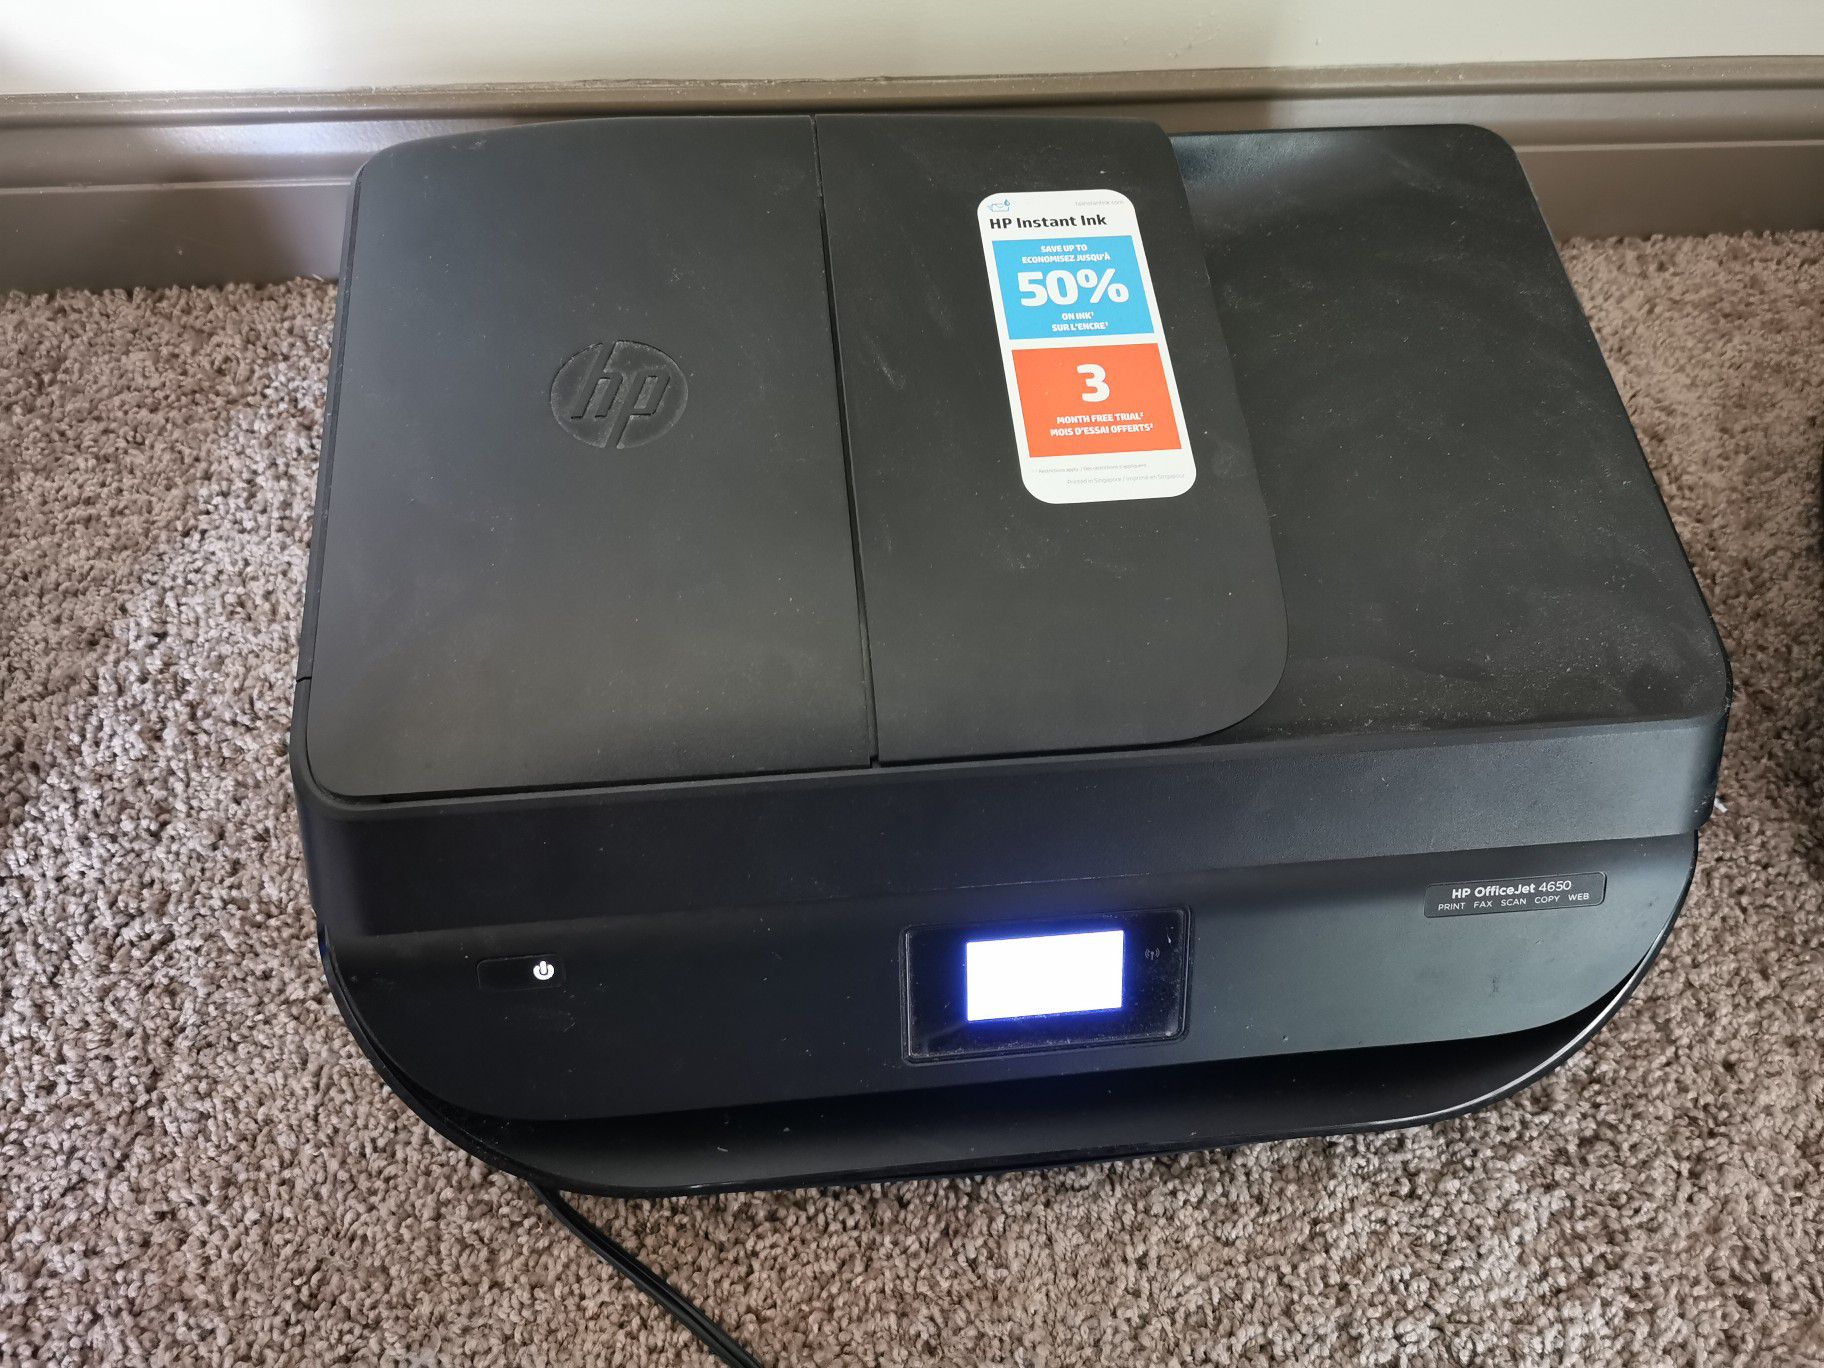 HP printer/scanner with original box